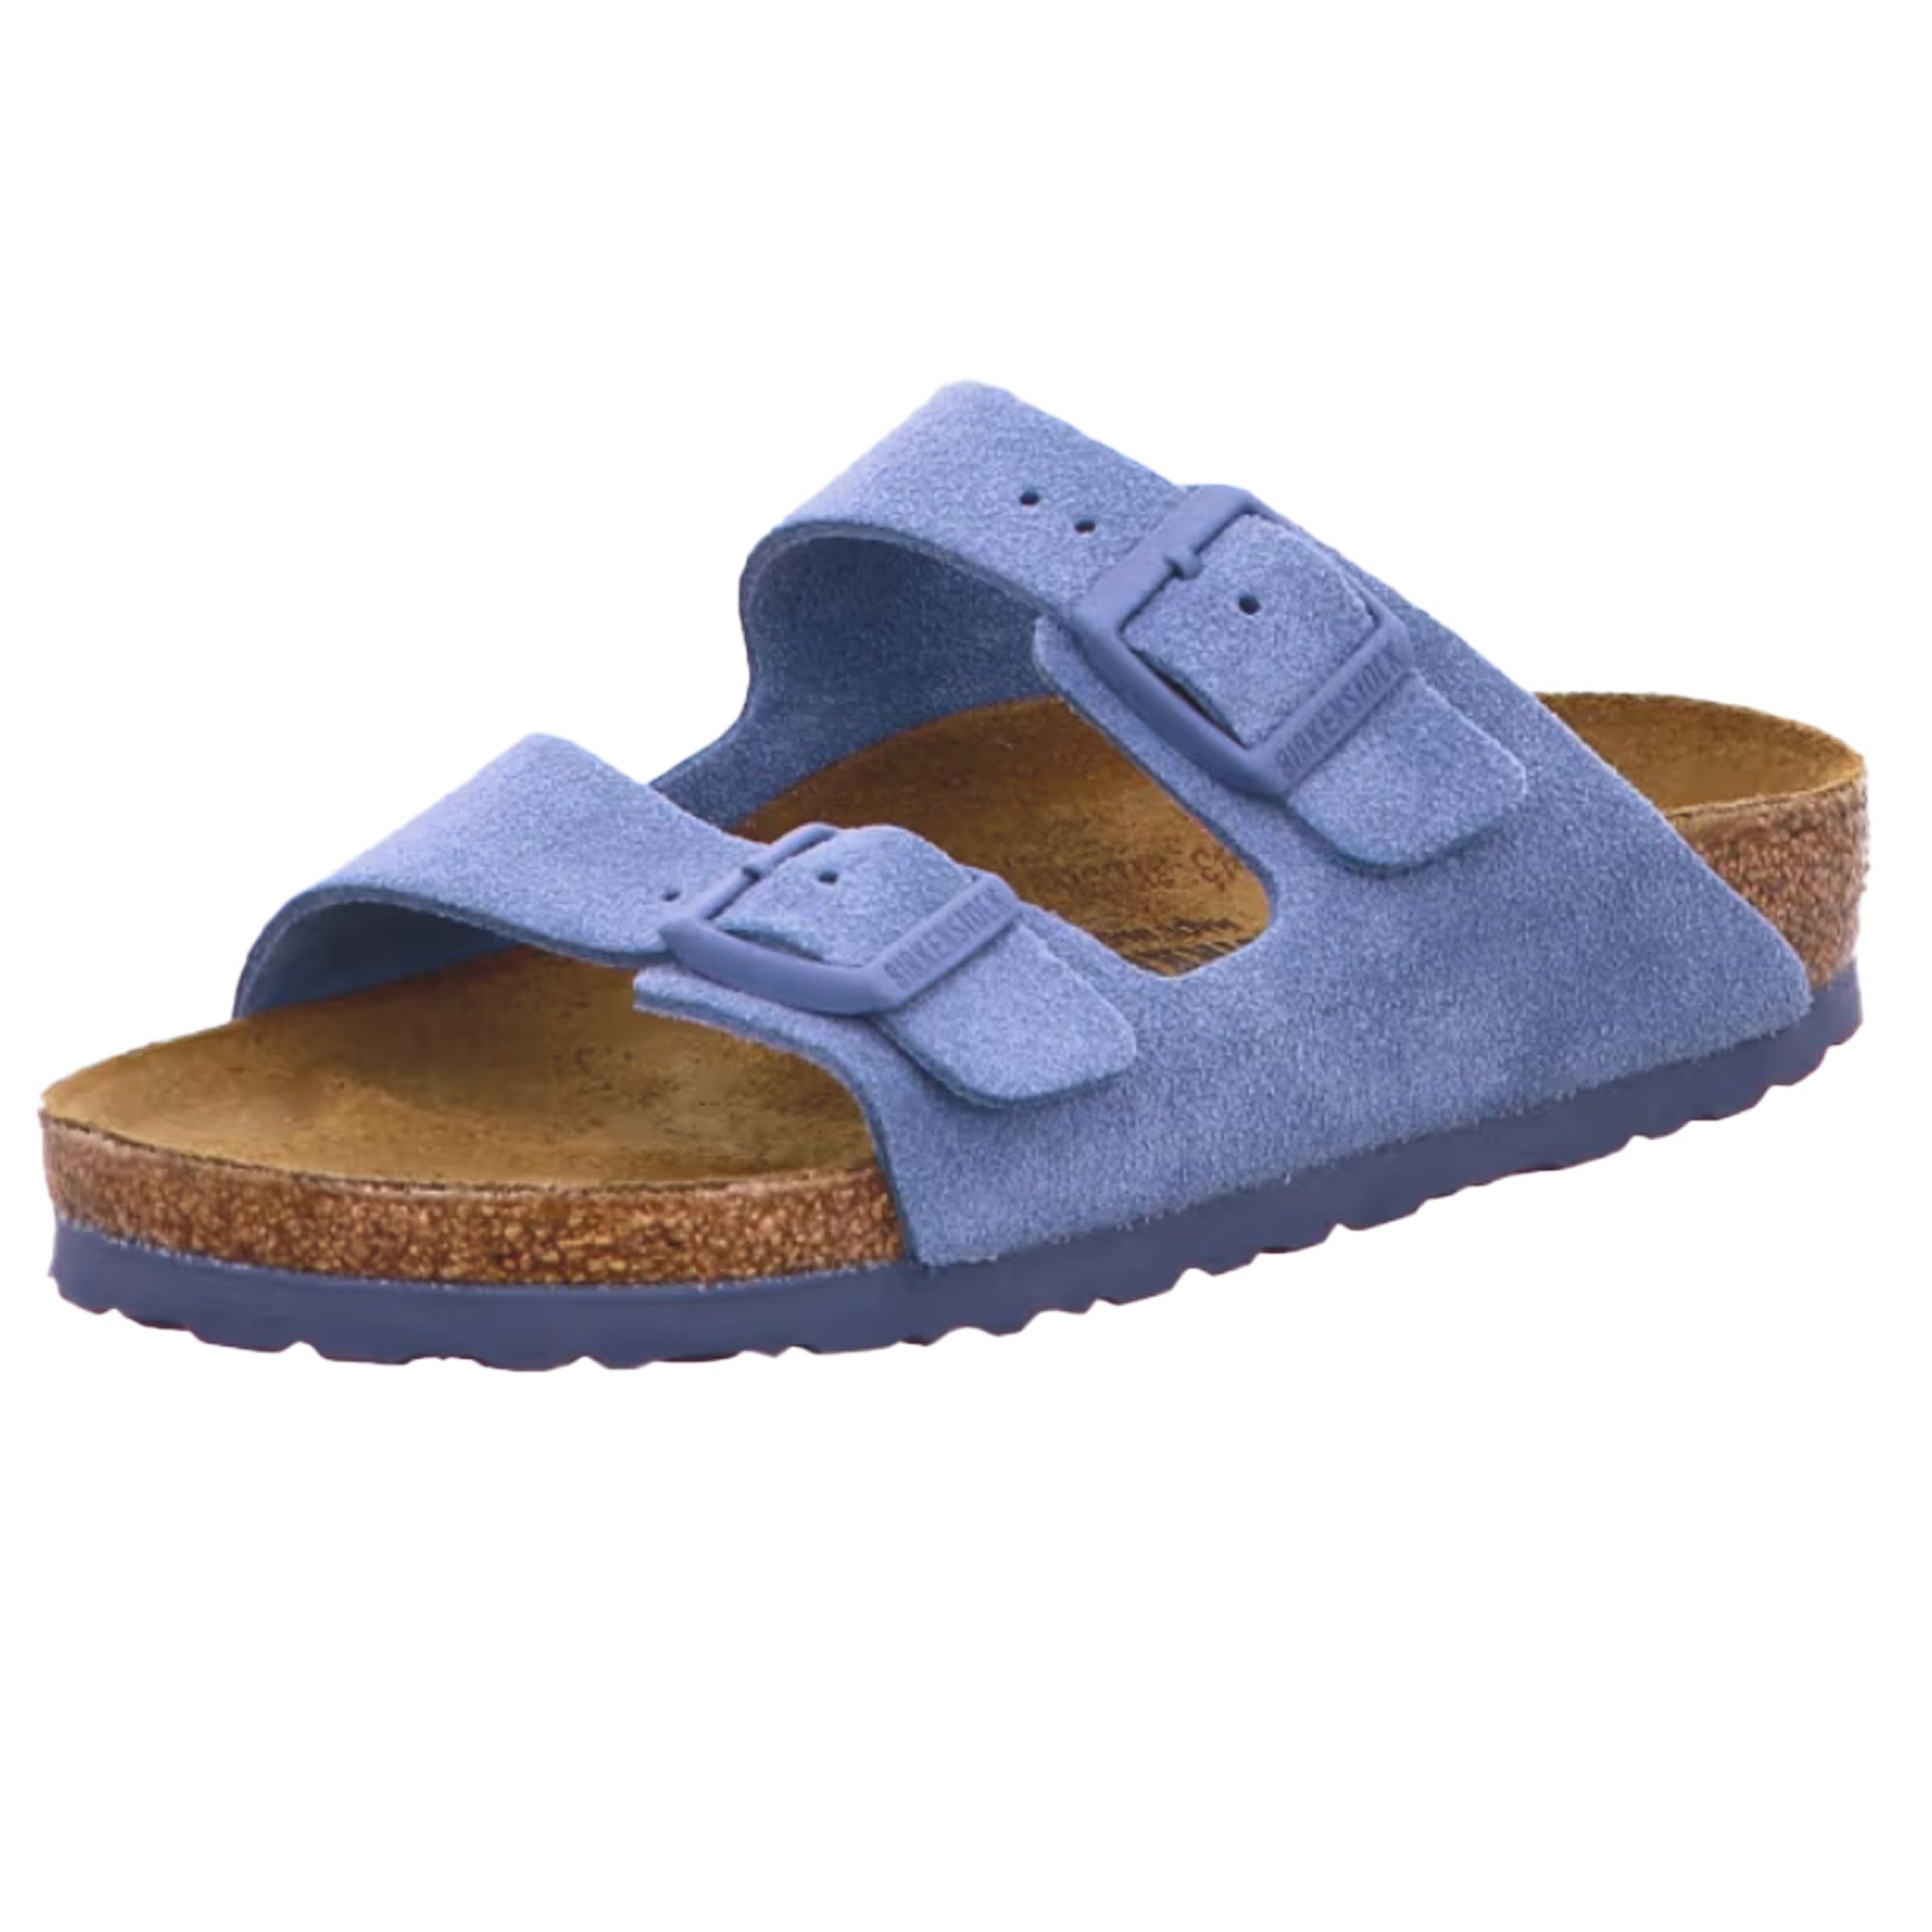 Birkenstock Arizona Suede Leather Sandals Slides Fuchsia Lime Blue Women Men Shoes